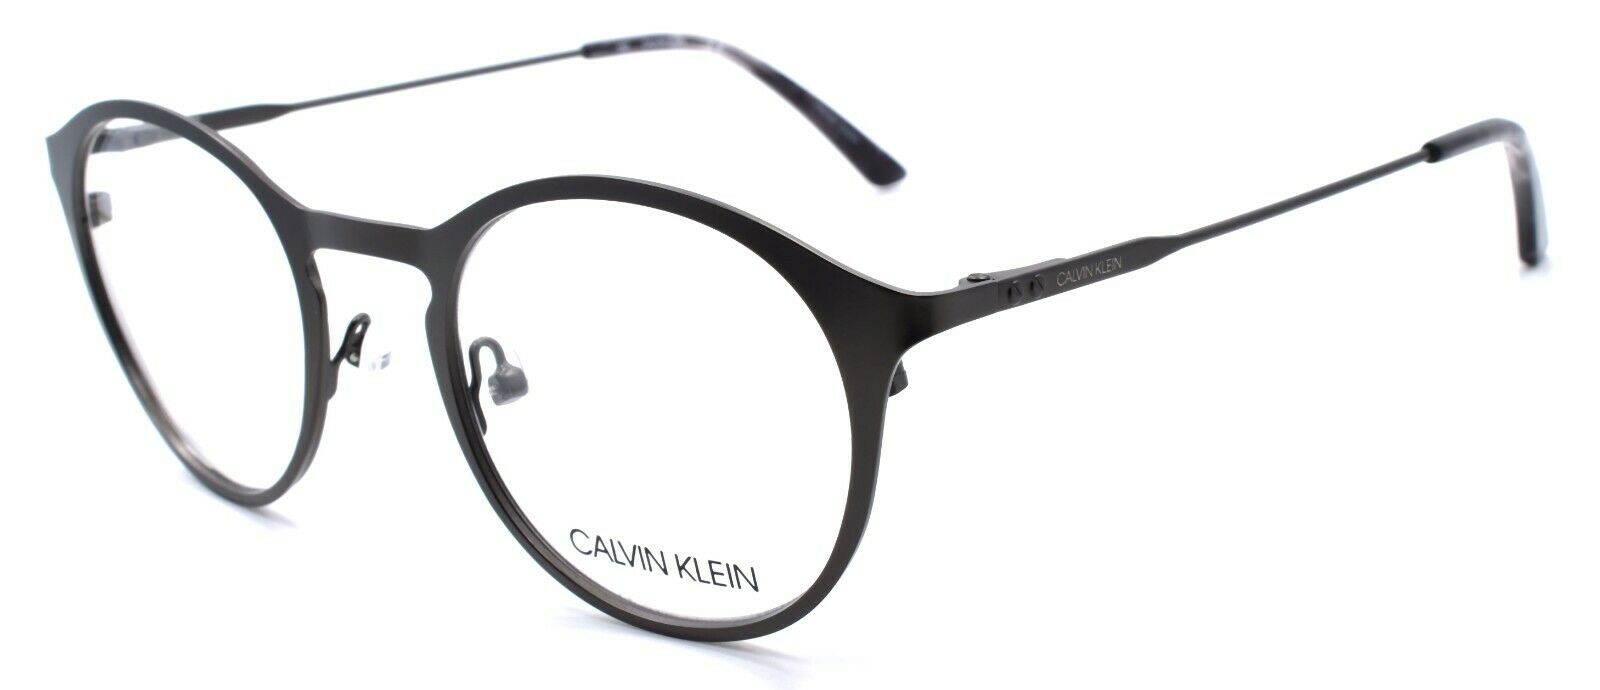 1-Calvin Klein C20112 008 Men's Eyeglasses Frames 47-20-150 Matte Gunmetal-883901127720-IKSpecs